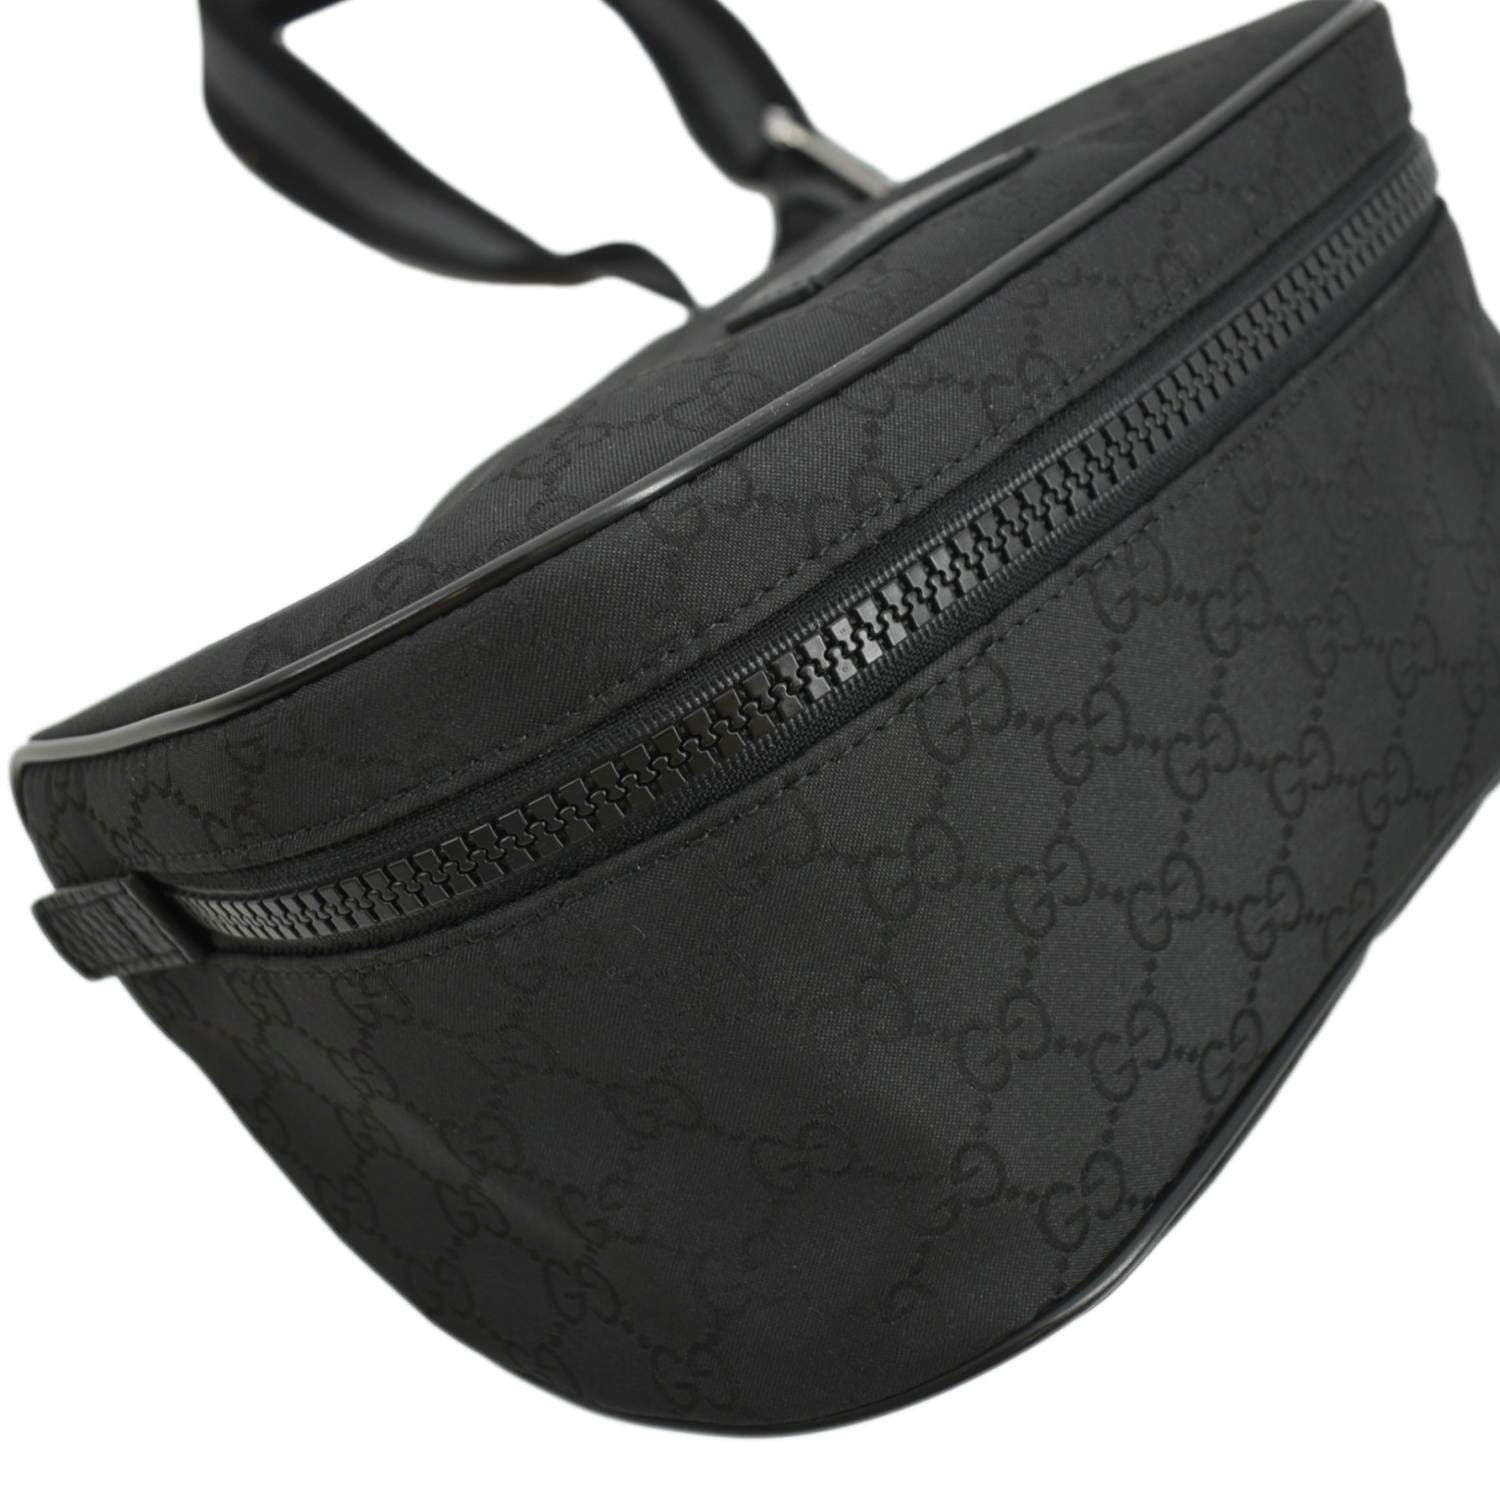 Gucci GG Supreme Belt Bumbag Black - Dallas Handbags